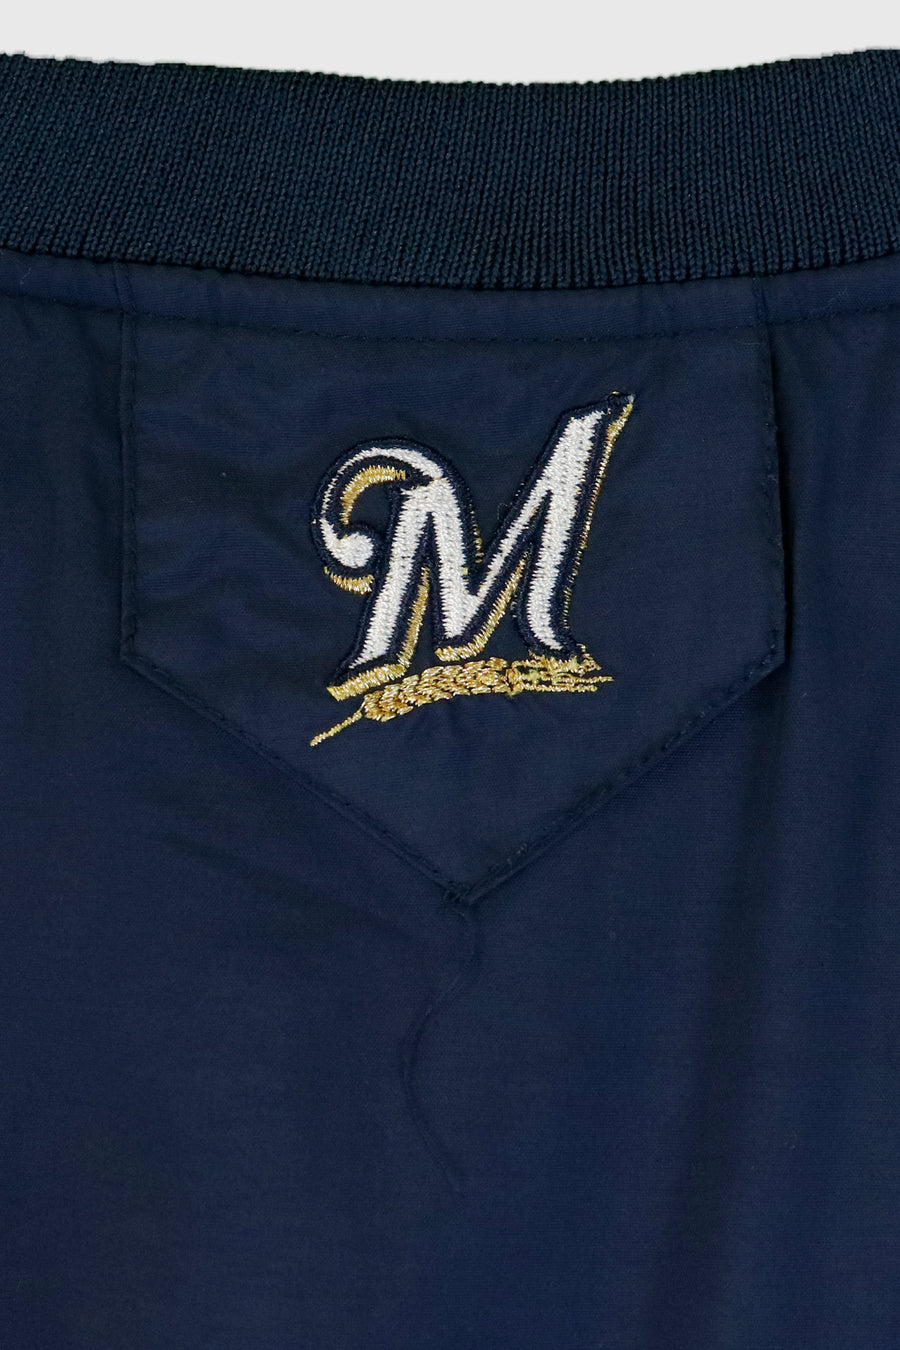 Vintage Milwaukee Brewers Embroidered Warmer Jacket Sz L